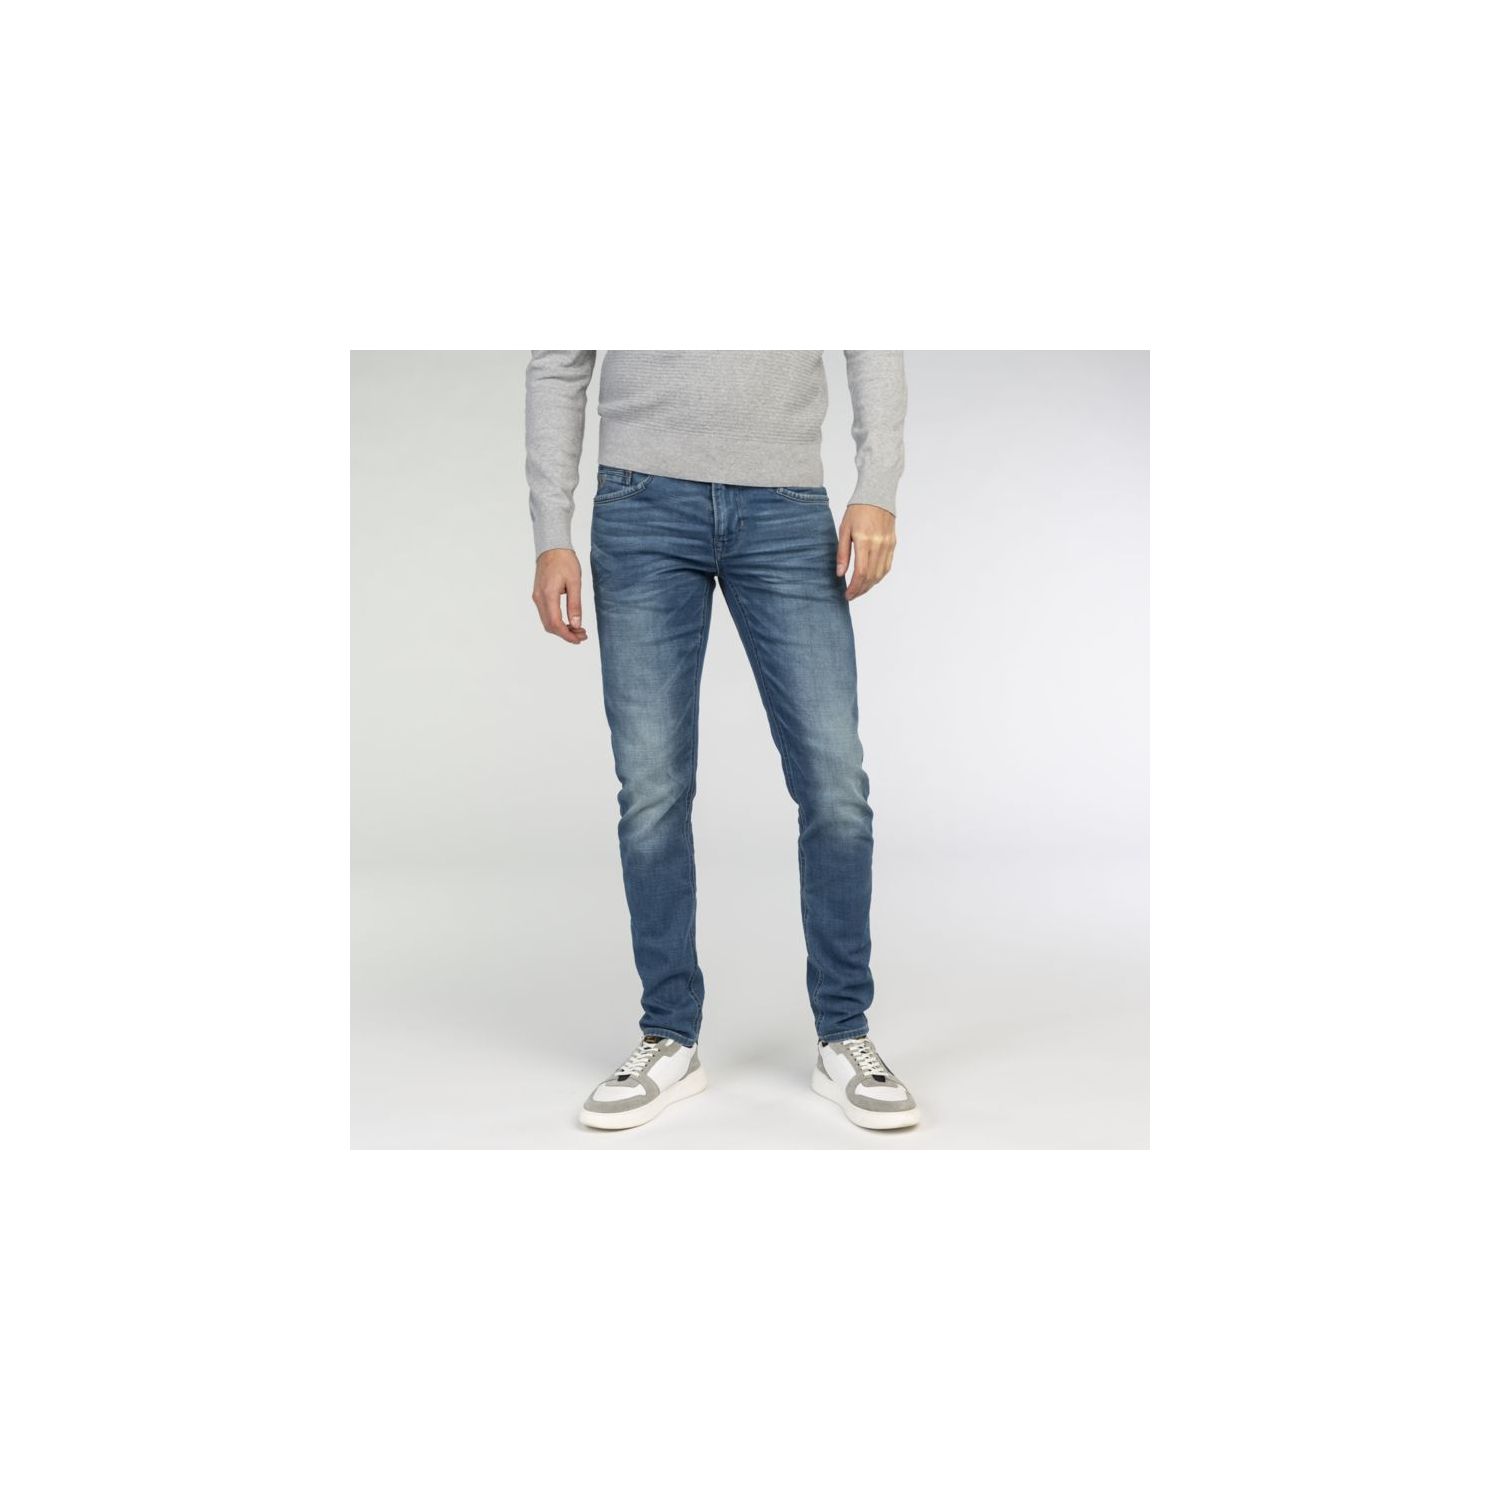 PME Legend tailwheel jeans soft mid blue